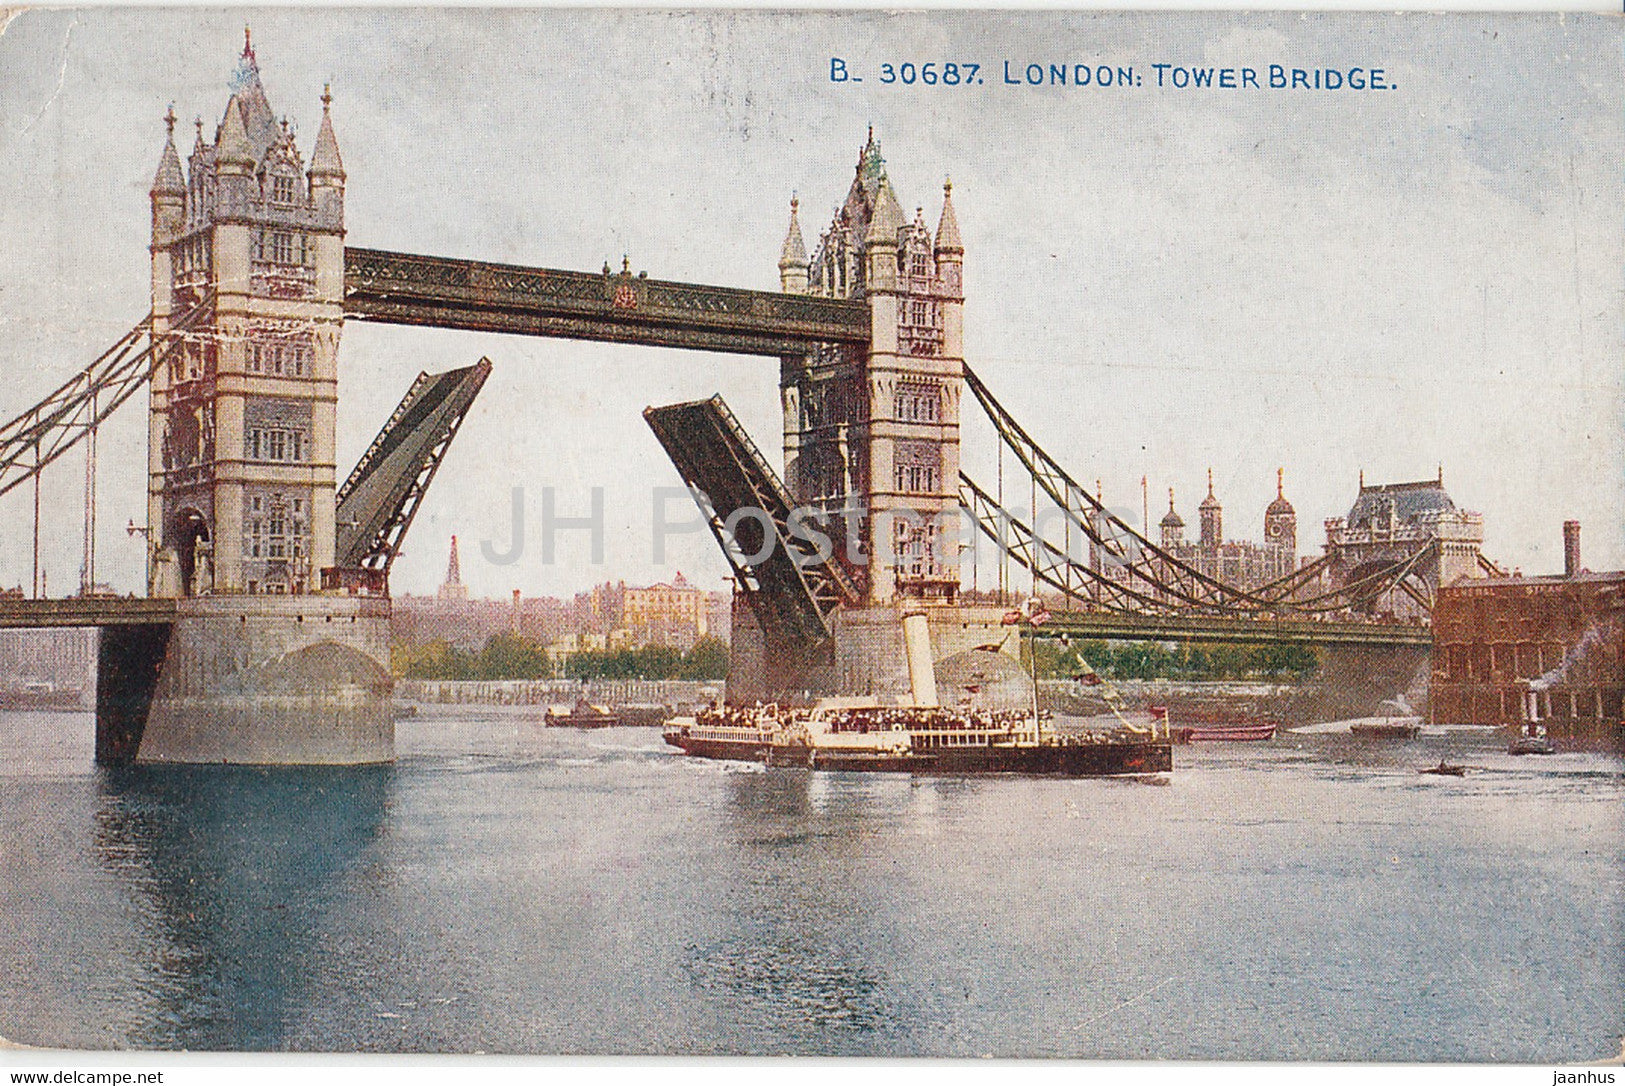 London - Tower Bridge - ship - streamer - Celfsque Series - old postcard - 1914 - England - United Kingdom - used - JH Postcards